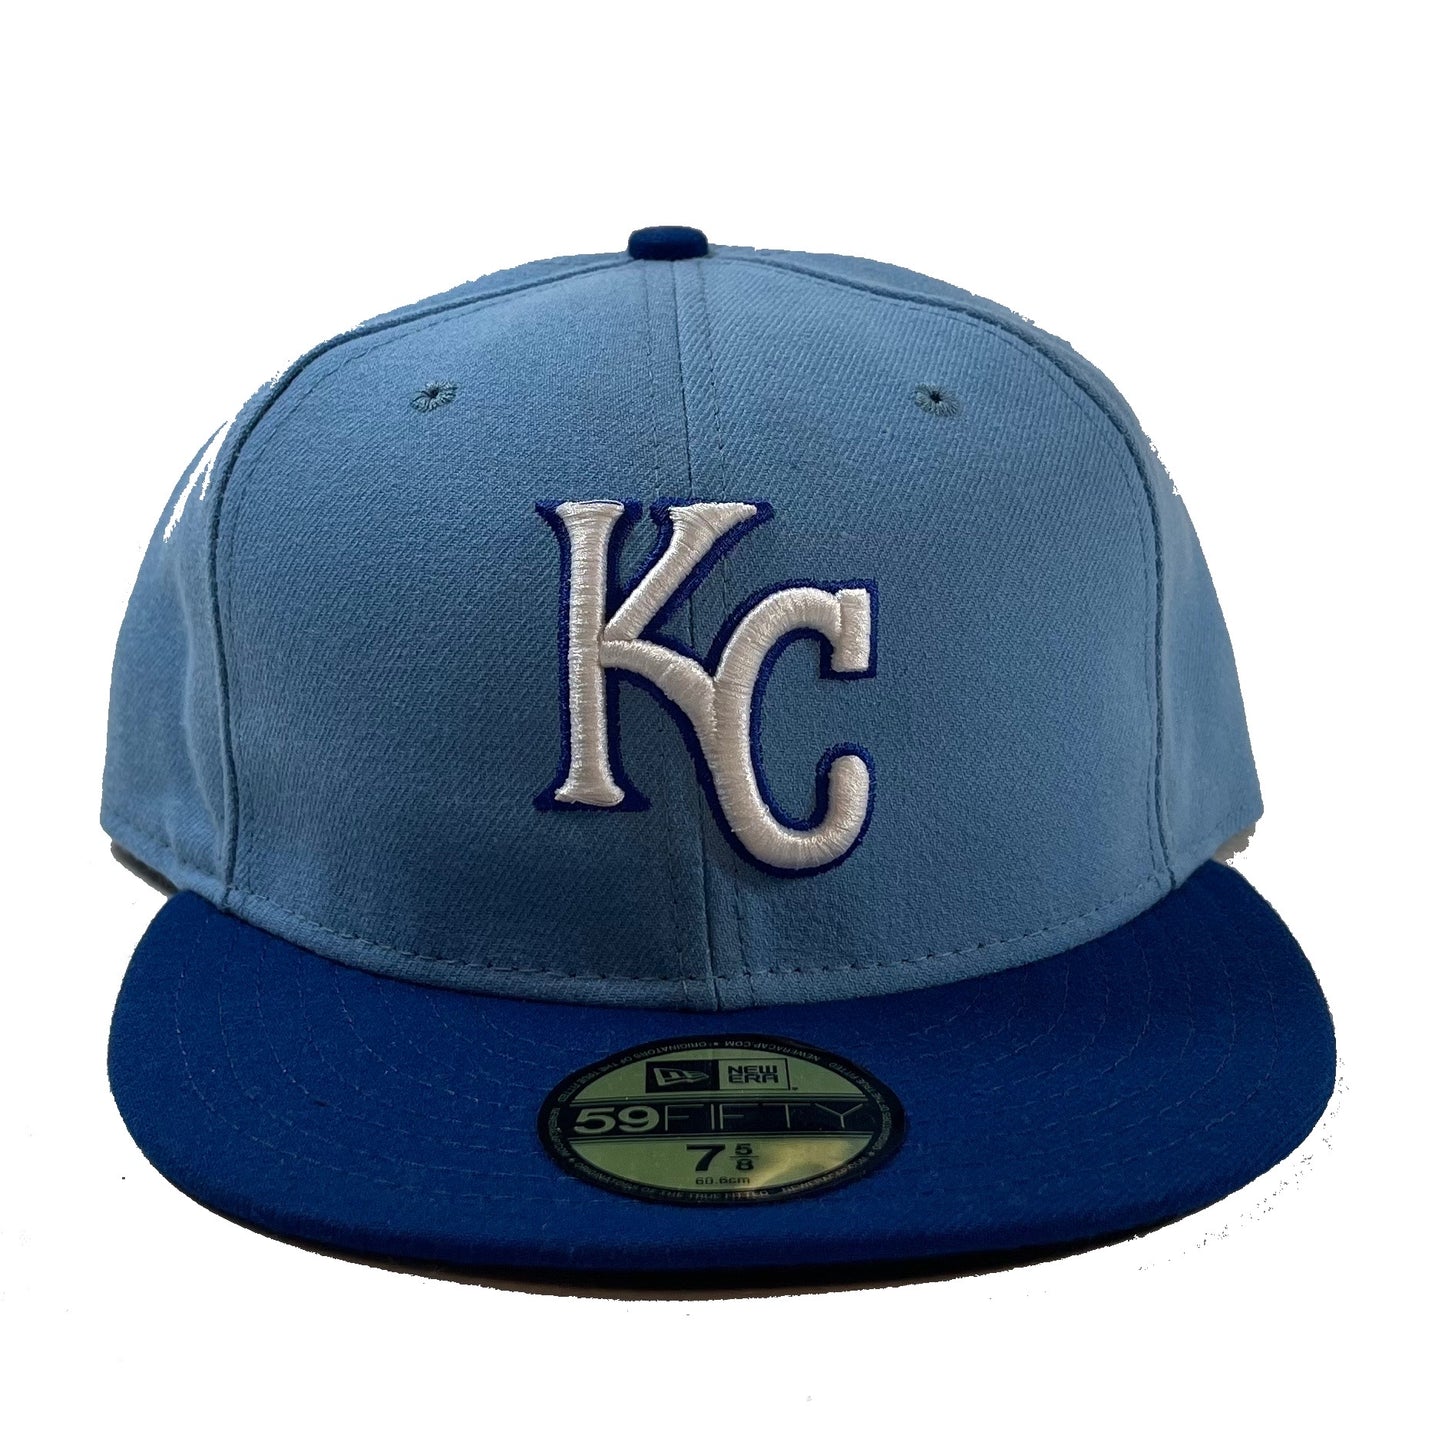 Kansas City Royals (Light Blue) Fitted